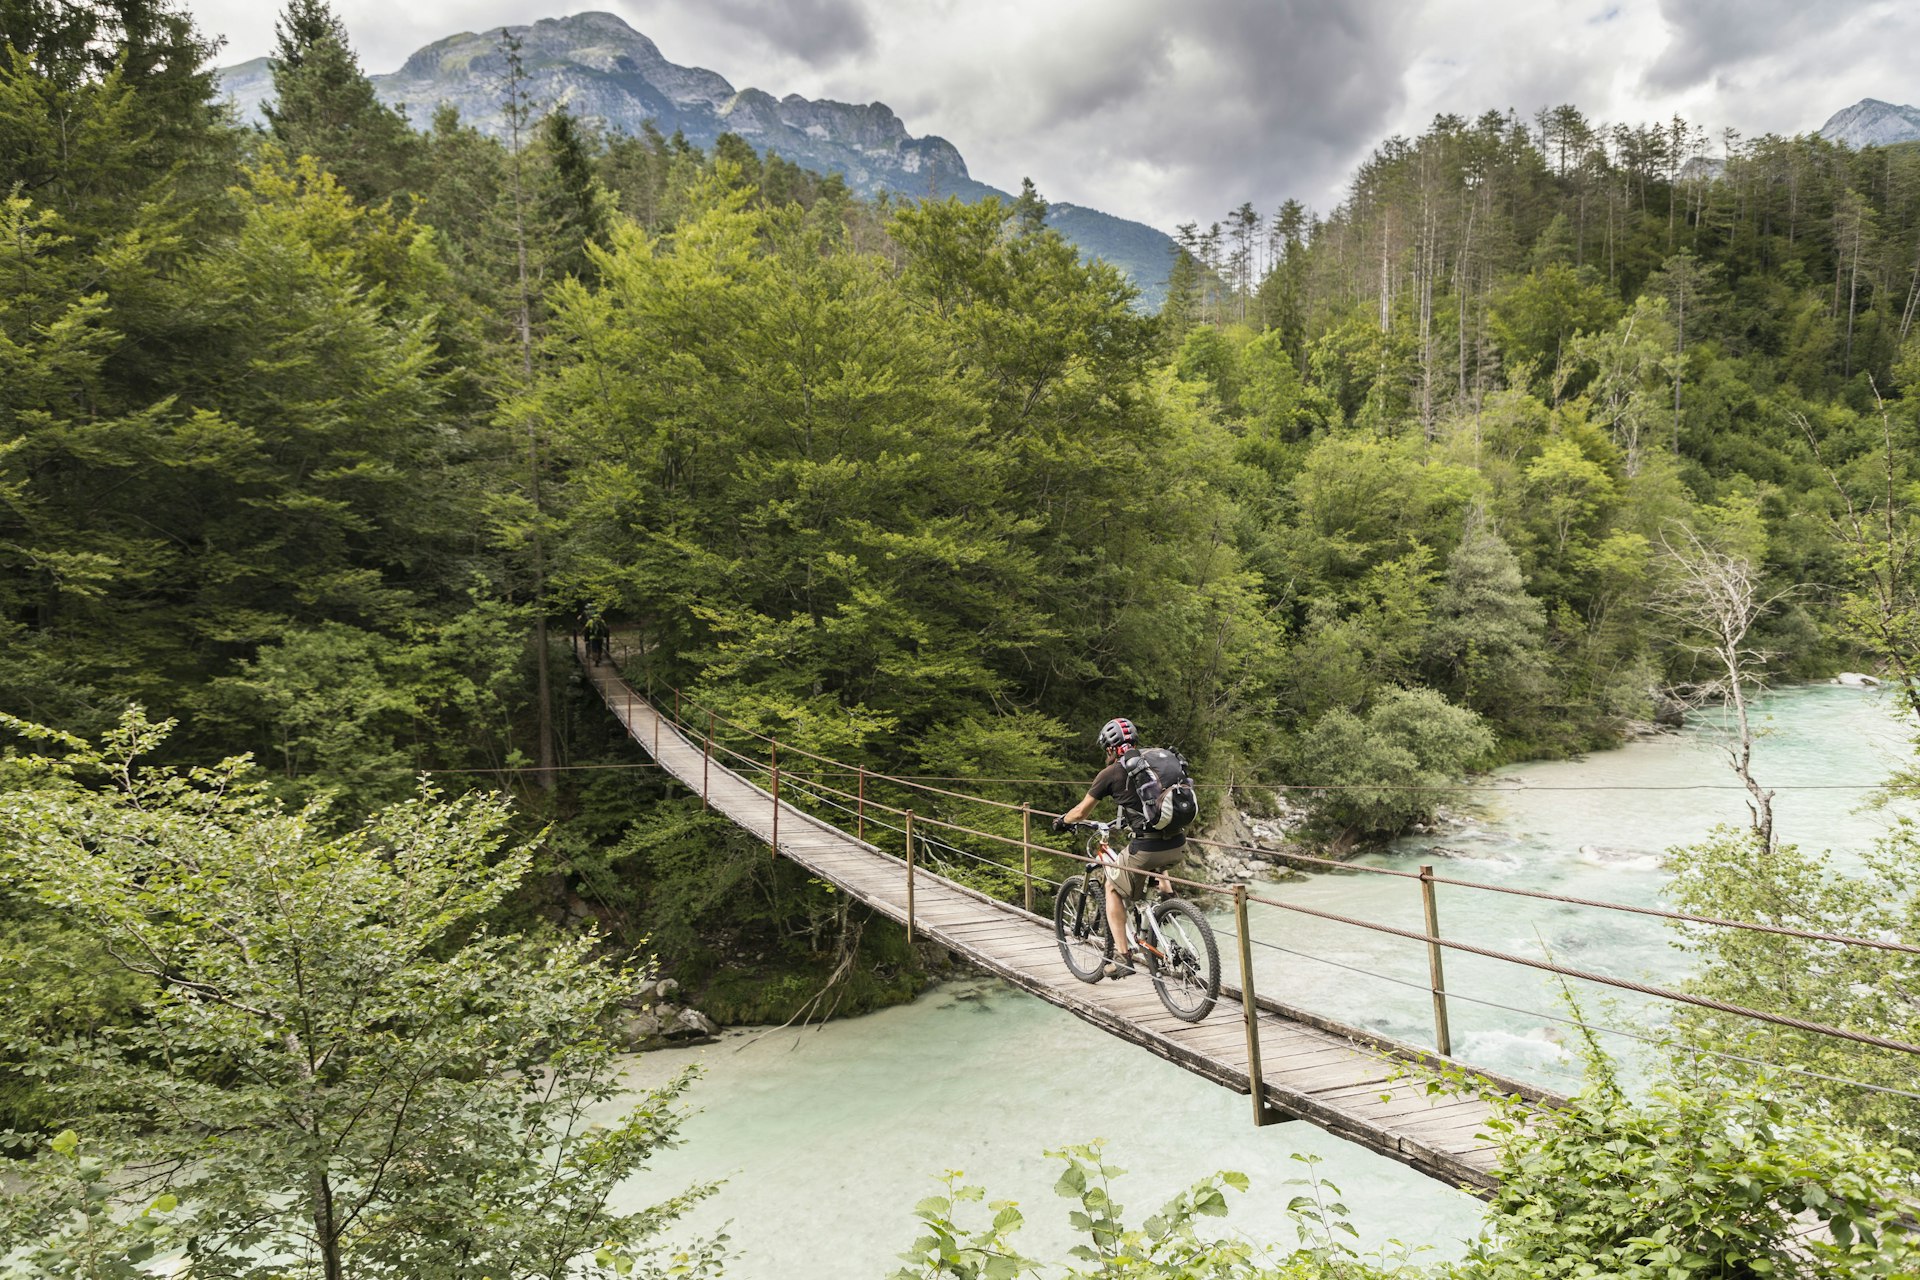 A cyclist rides over a suspension bridge above a river